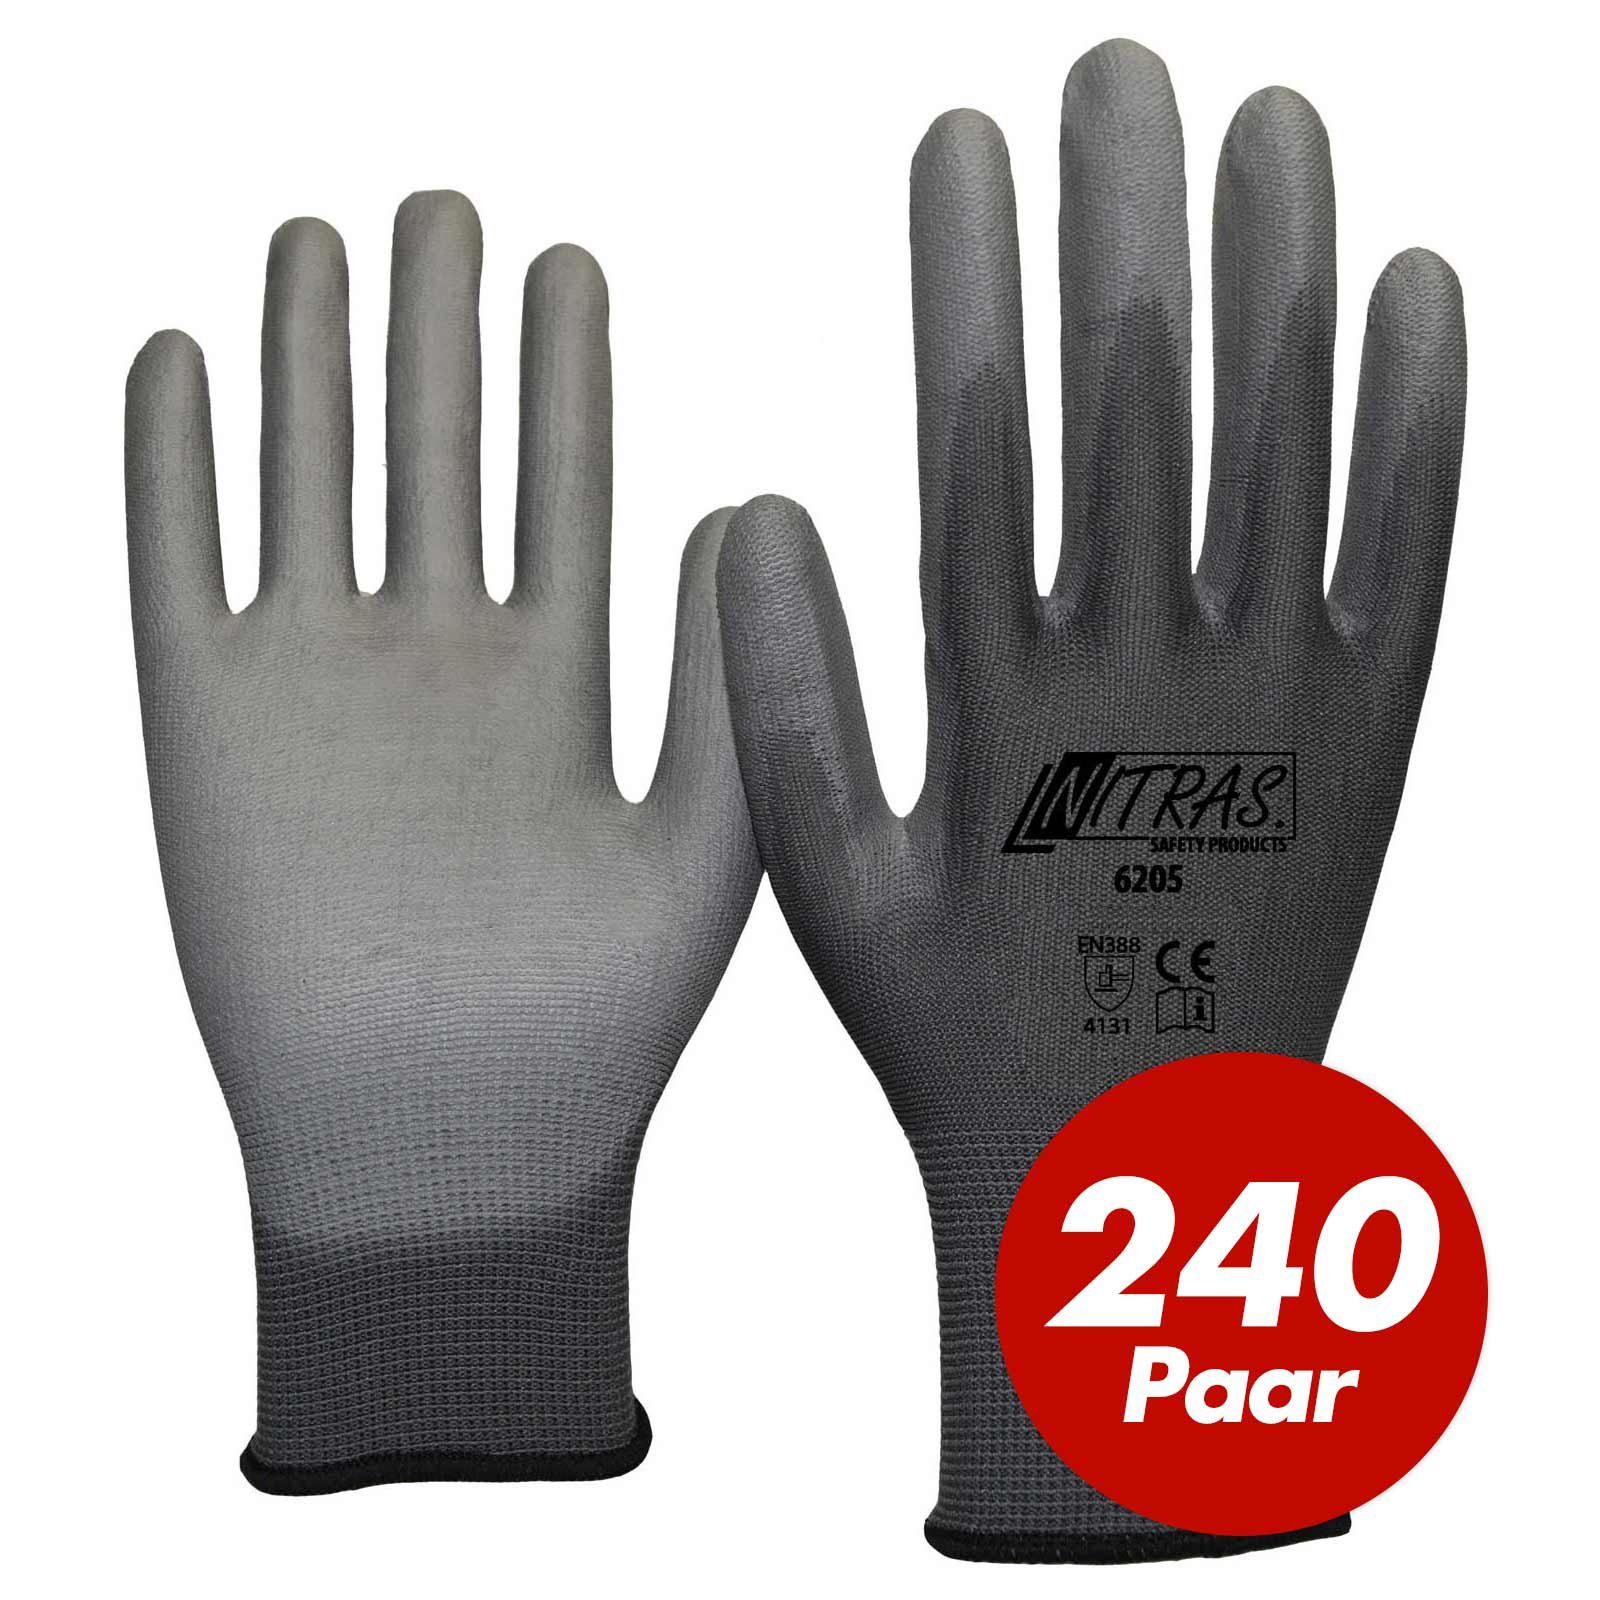 Nitras Nitril-Handschuhe 6205 Nylon Strickhandschuh grau, Gartenhandschuhe - 240 Paar (Spar-Set)